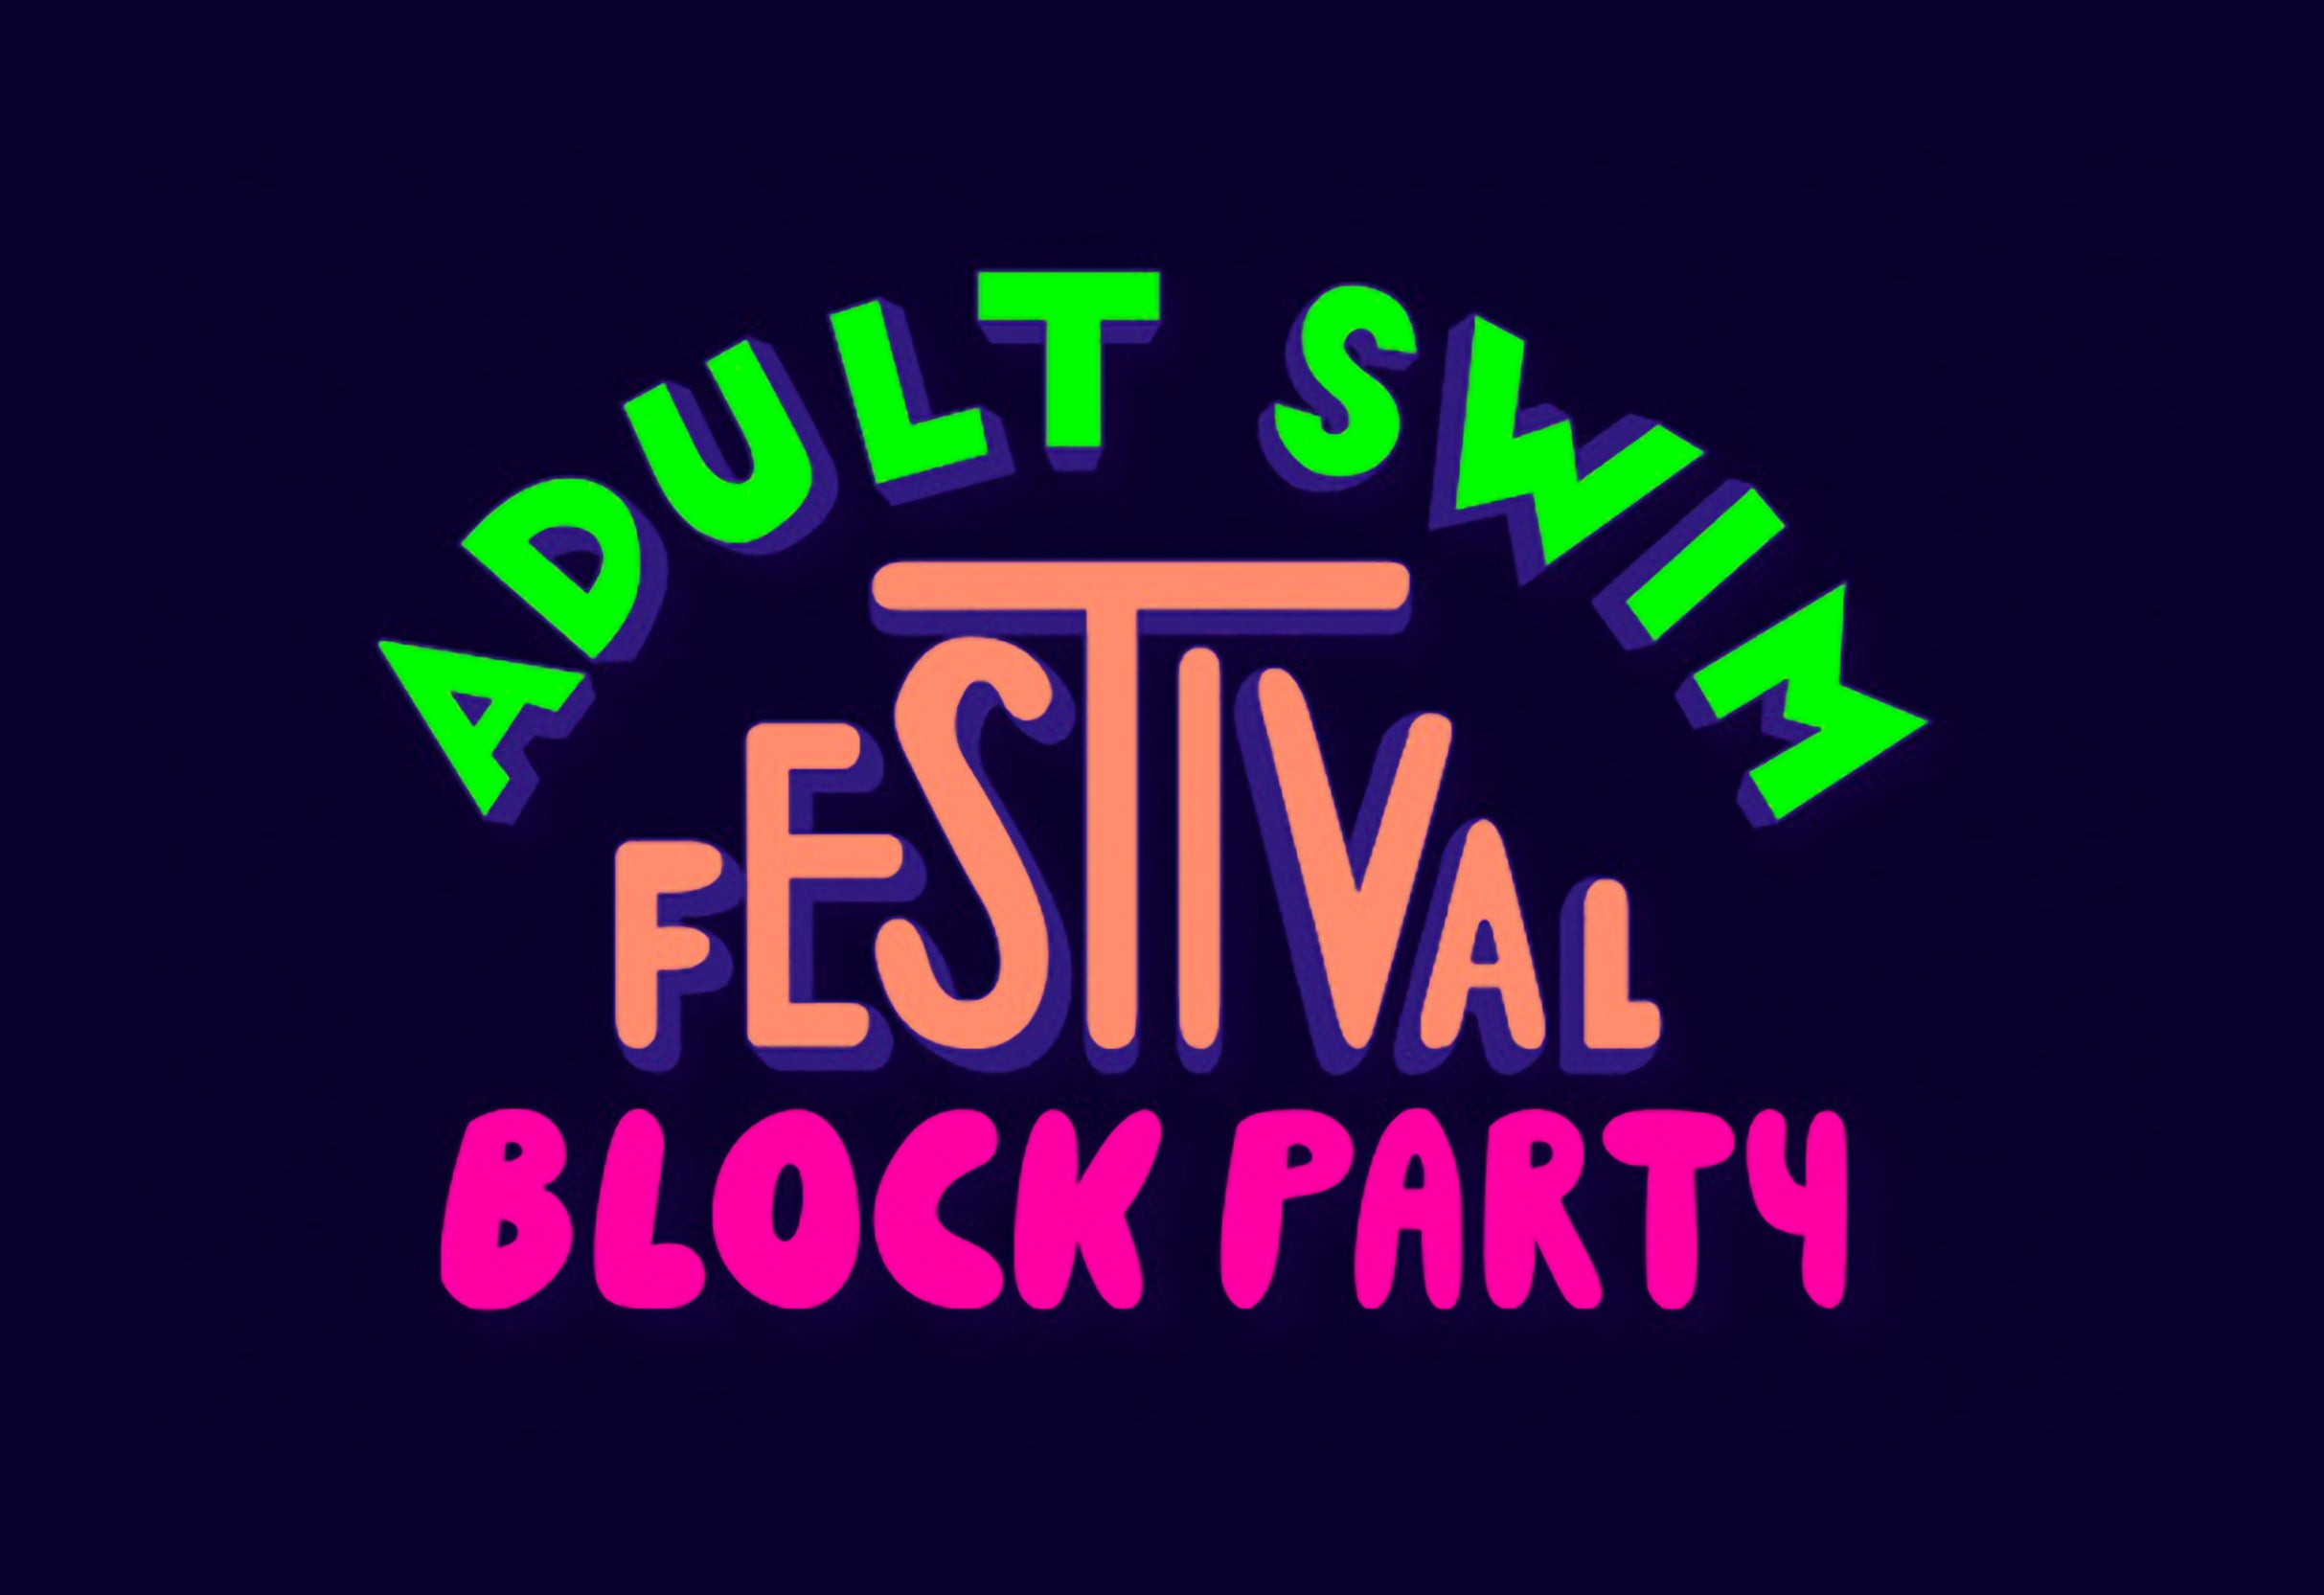 Live Adult Swim Panels - Adult Swim Festival Block Party in Philadelphia promo photo for Adult Swim presale offer code